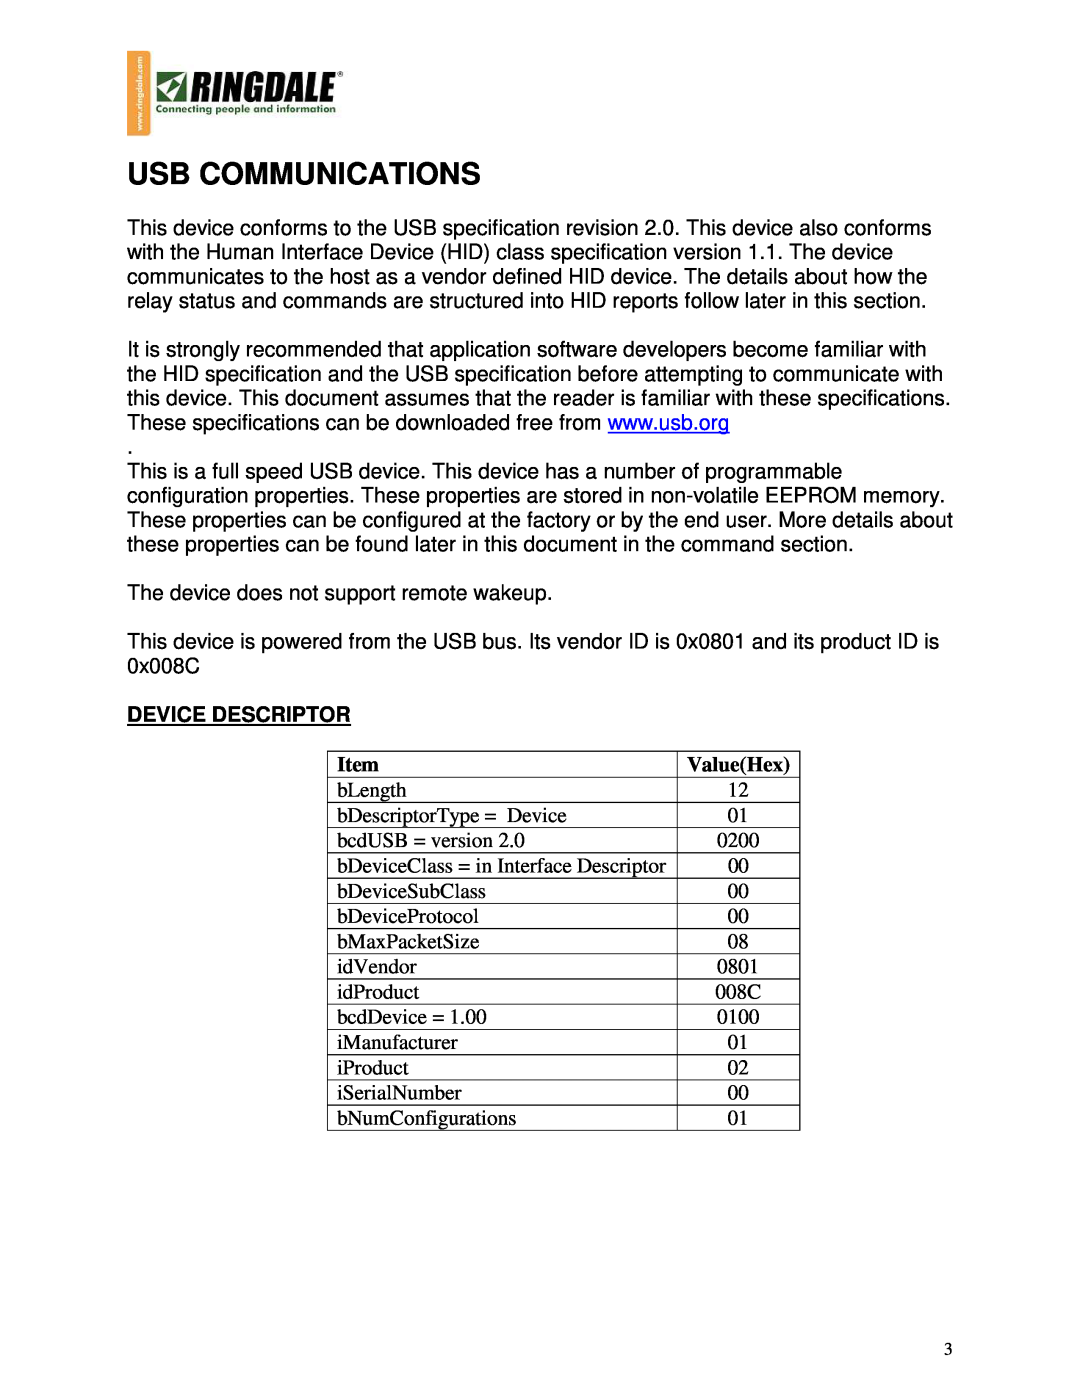 Ringdale 1543 manual Device Descriptor, ValueHex, Usb Communications 